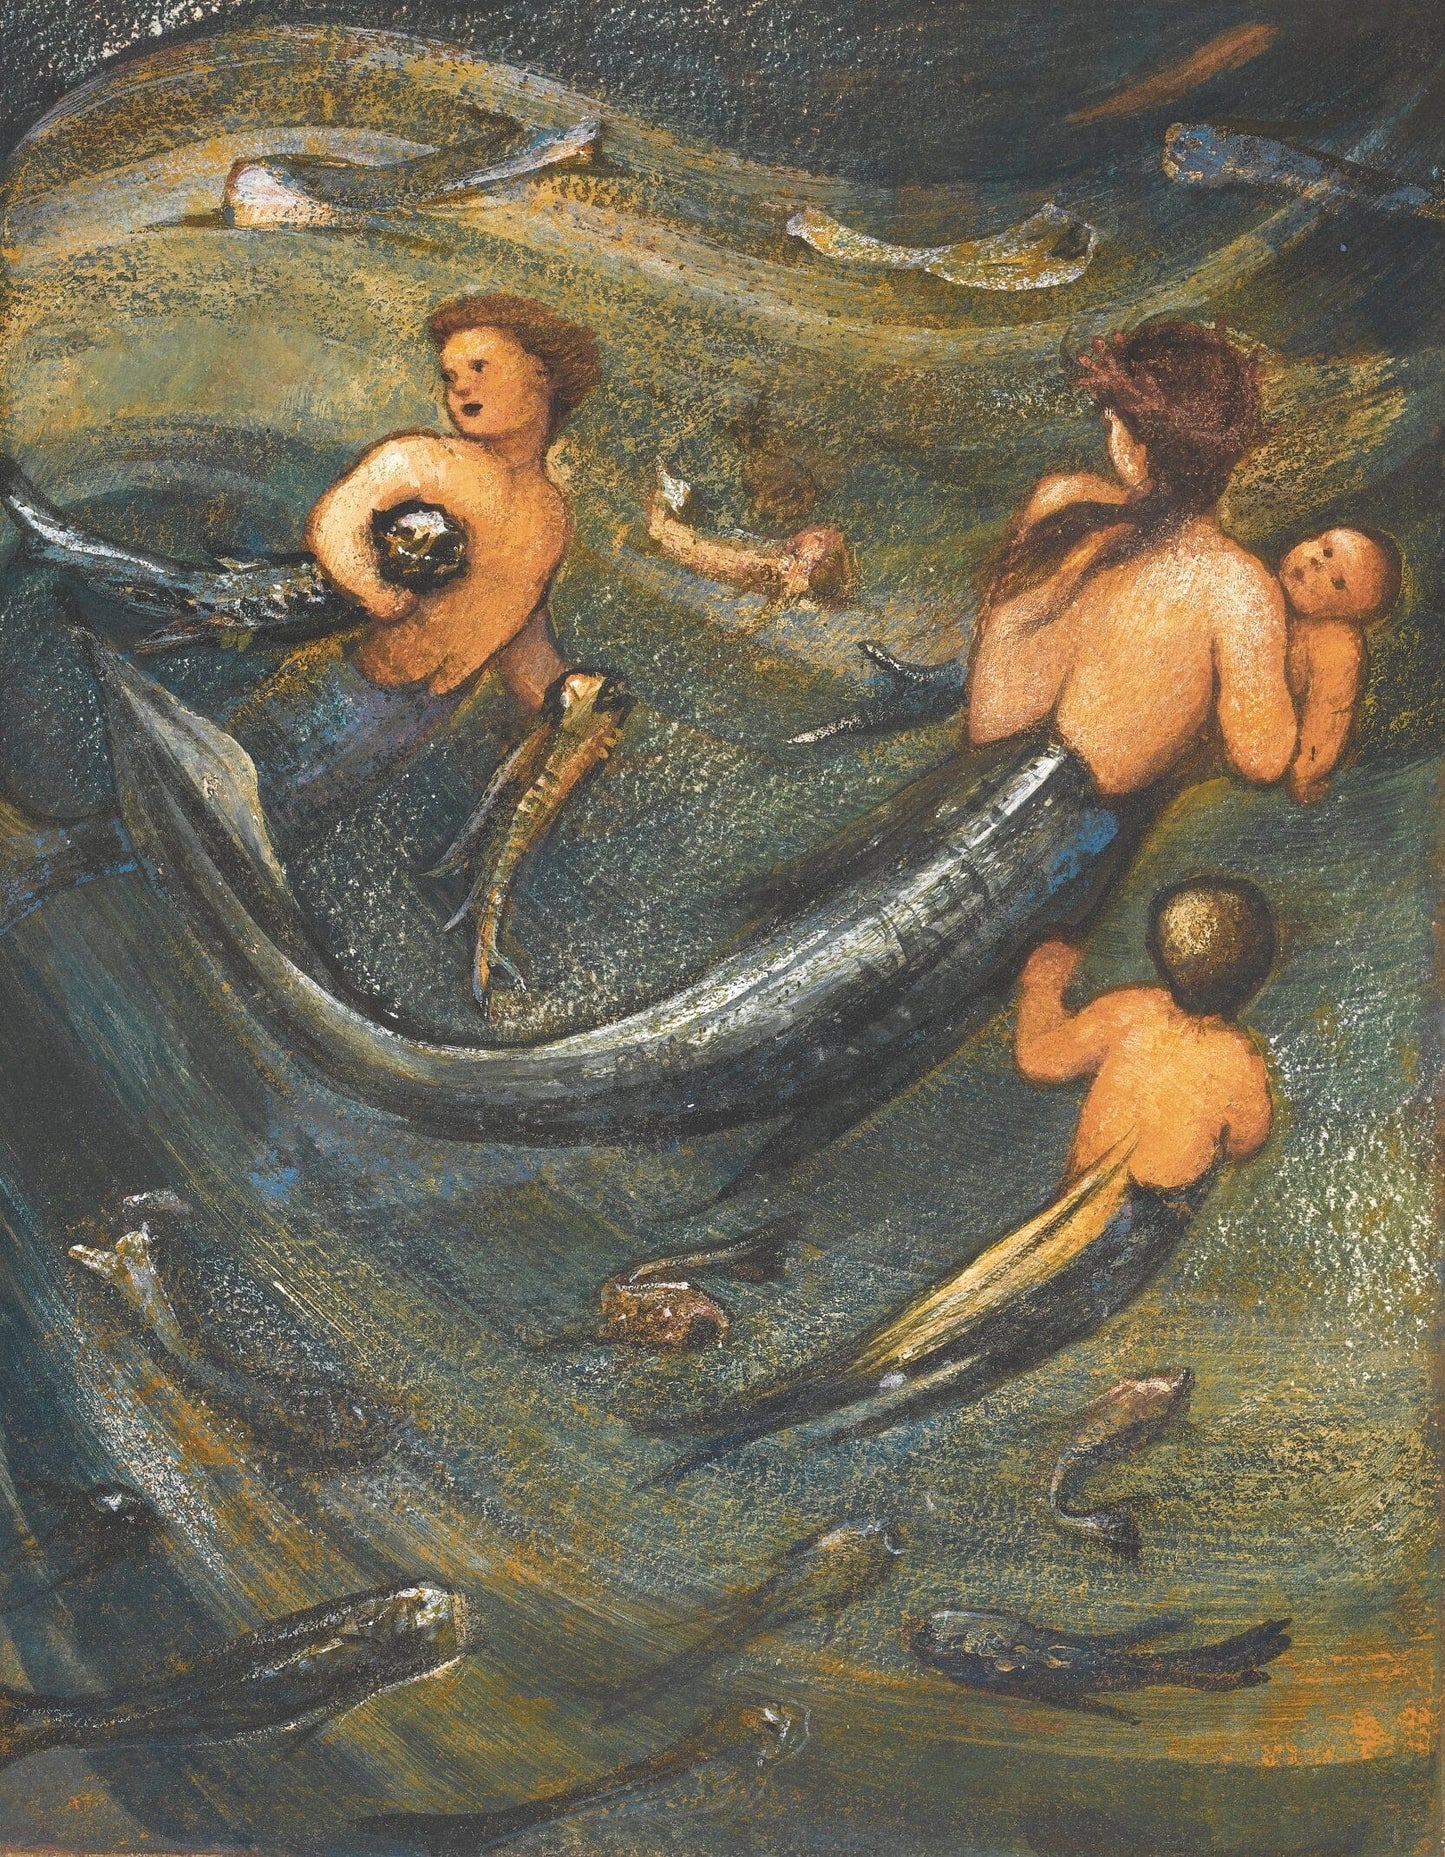 The Mermaid Family (c1870s) | Mermaid wall art print | Sir Edward Coley Burne-Jones Posters, Prints, & Visual Artwork The Trumpet Shop   